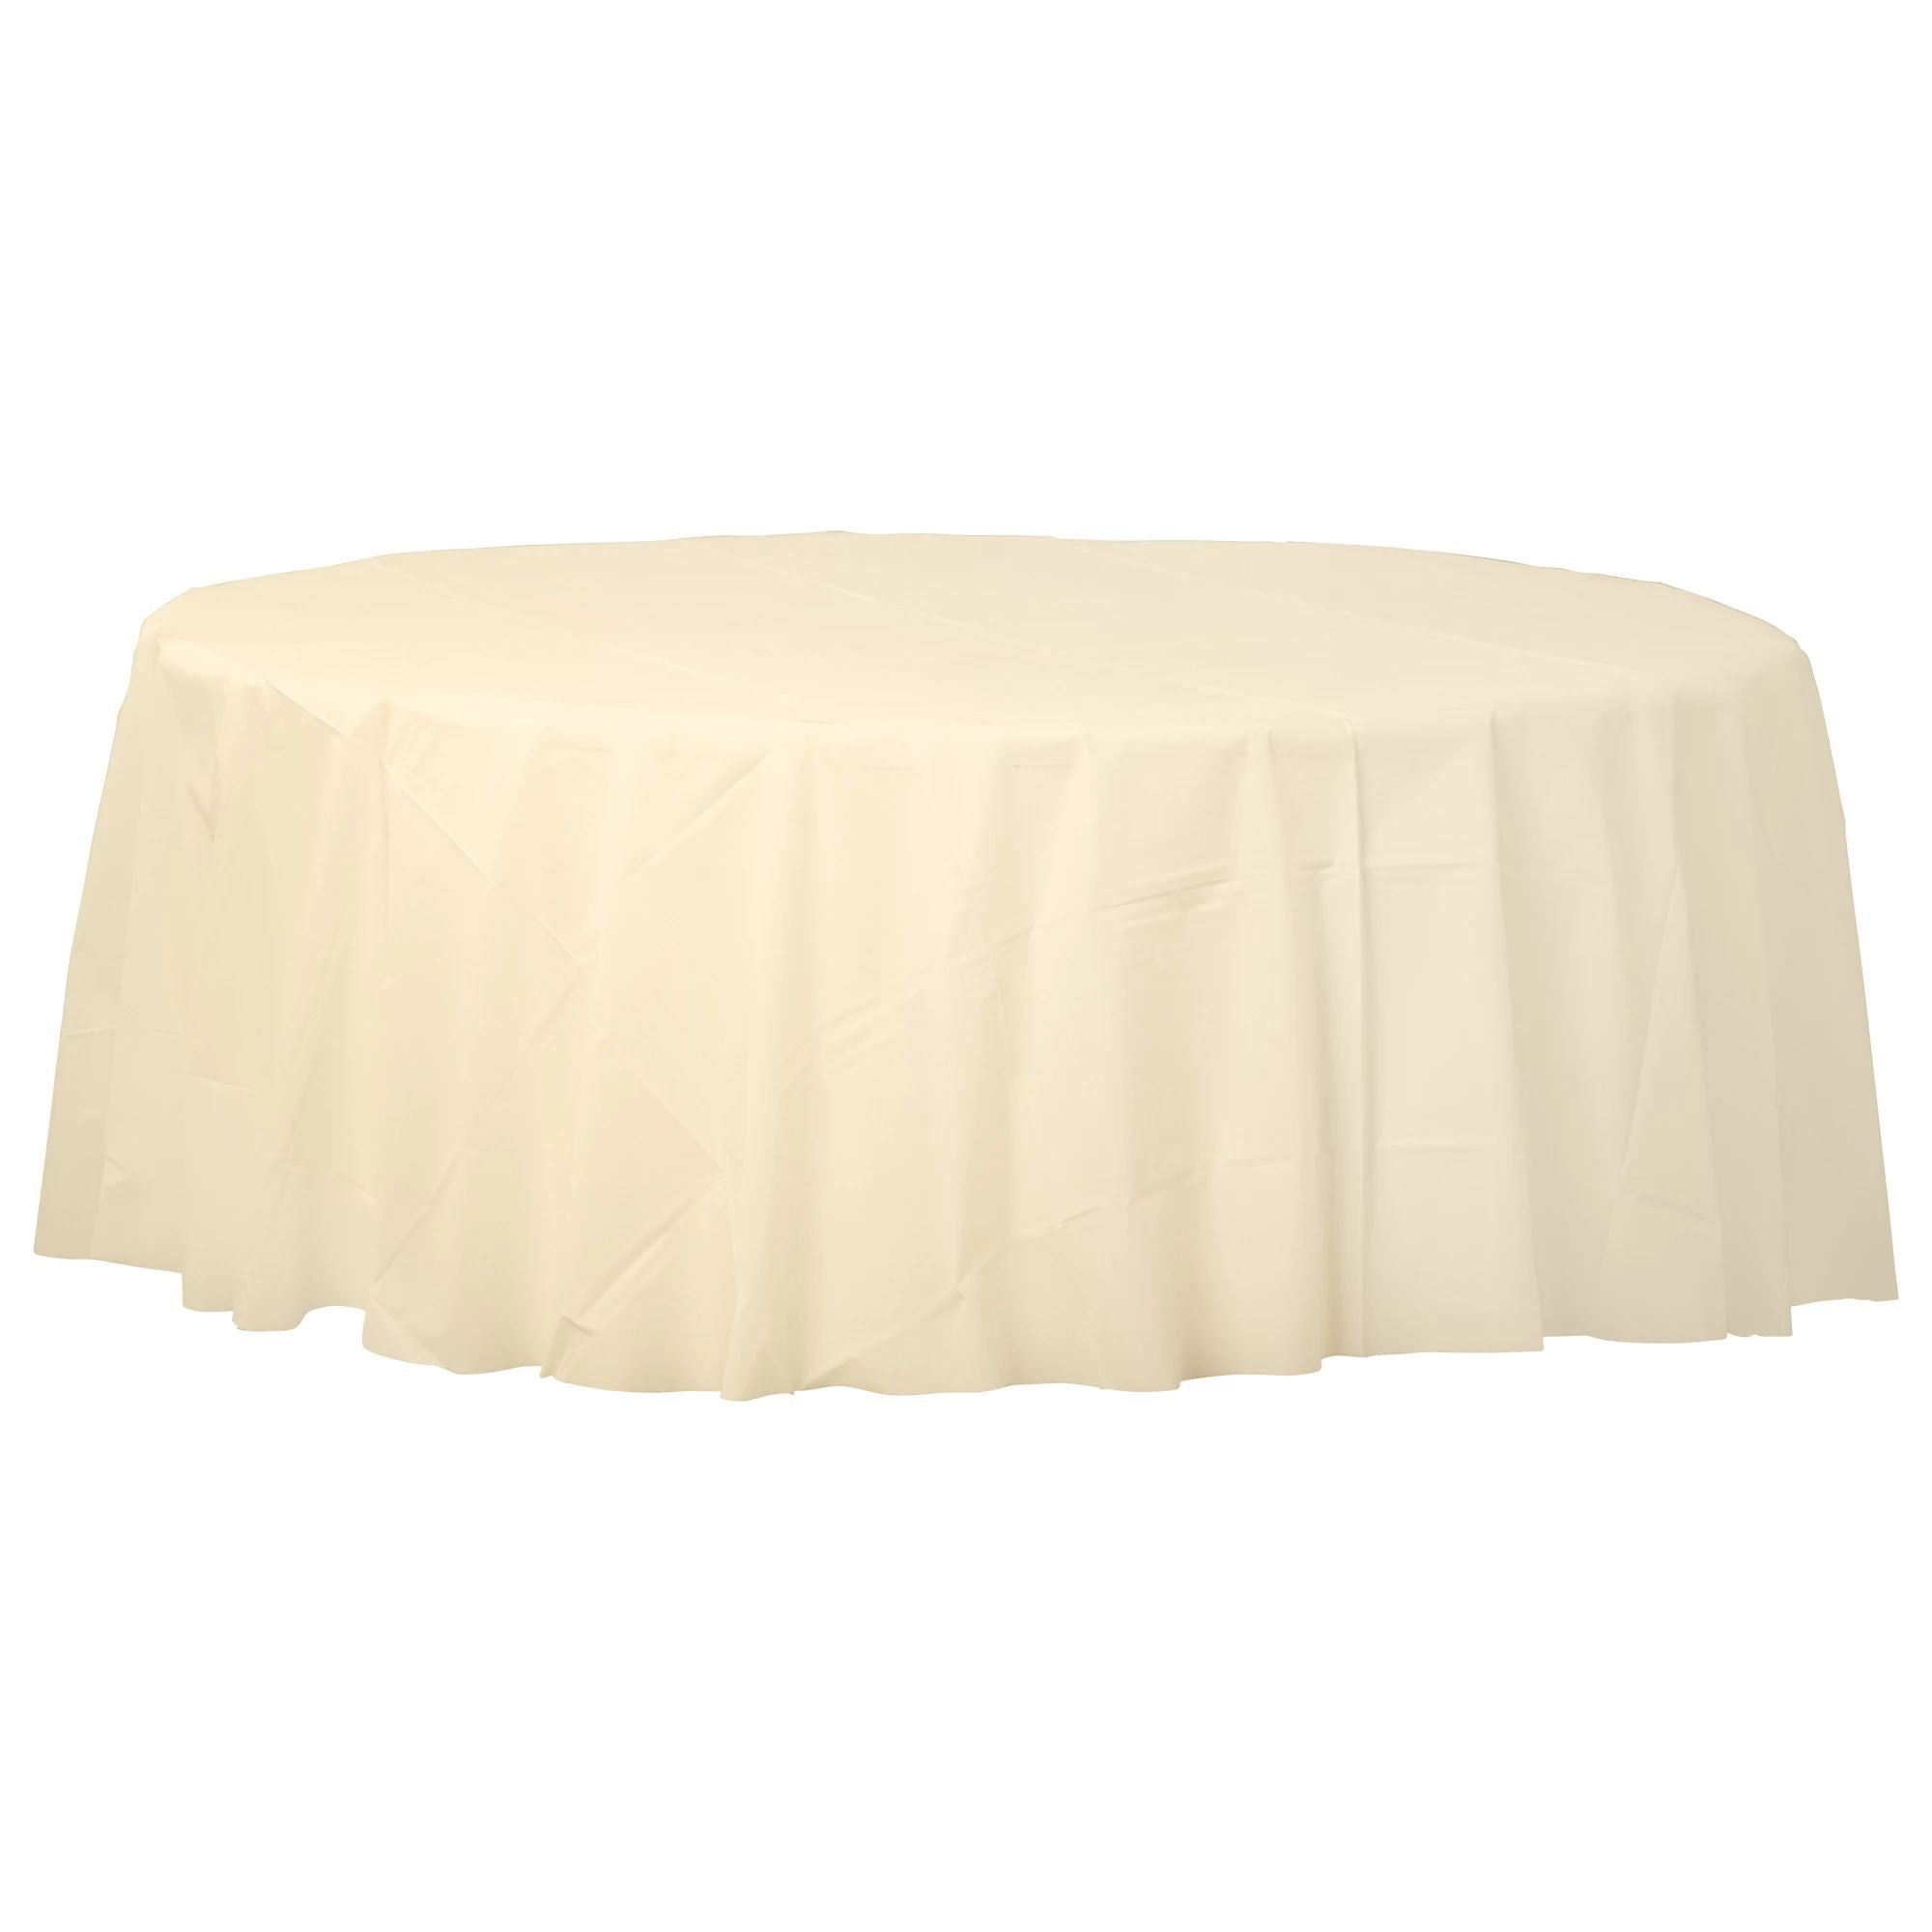 Round Plastic Table Cover - Vanilla Creme - 84"